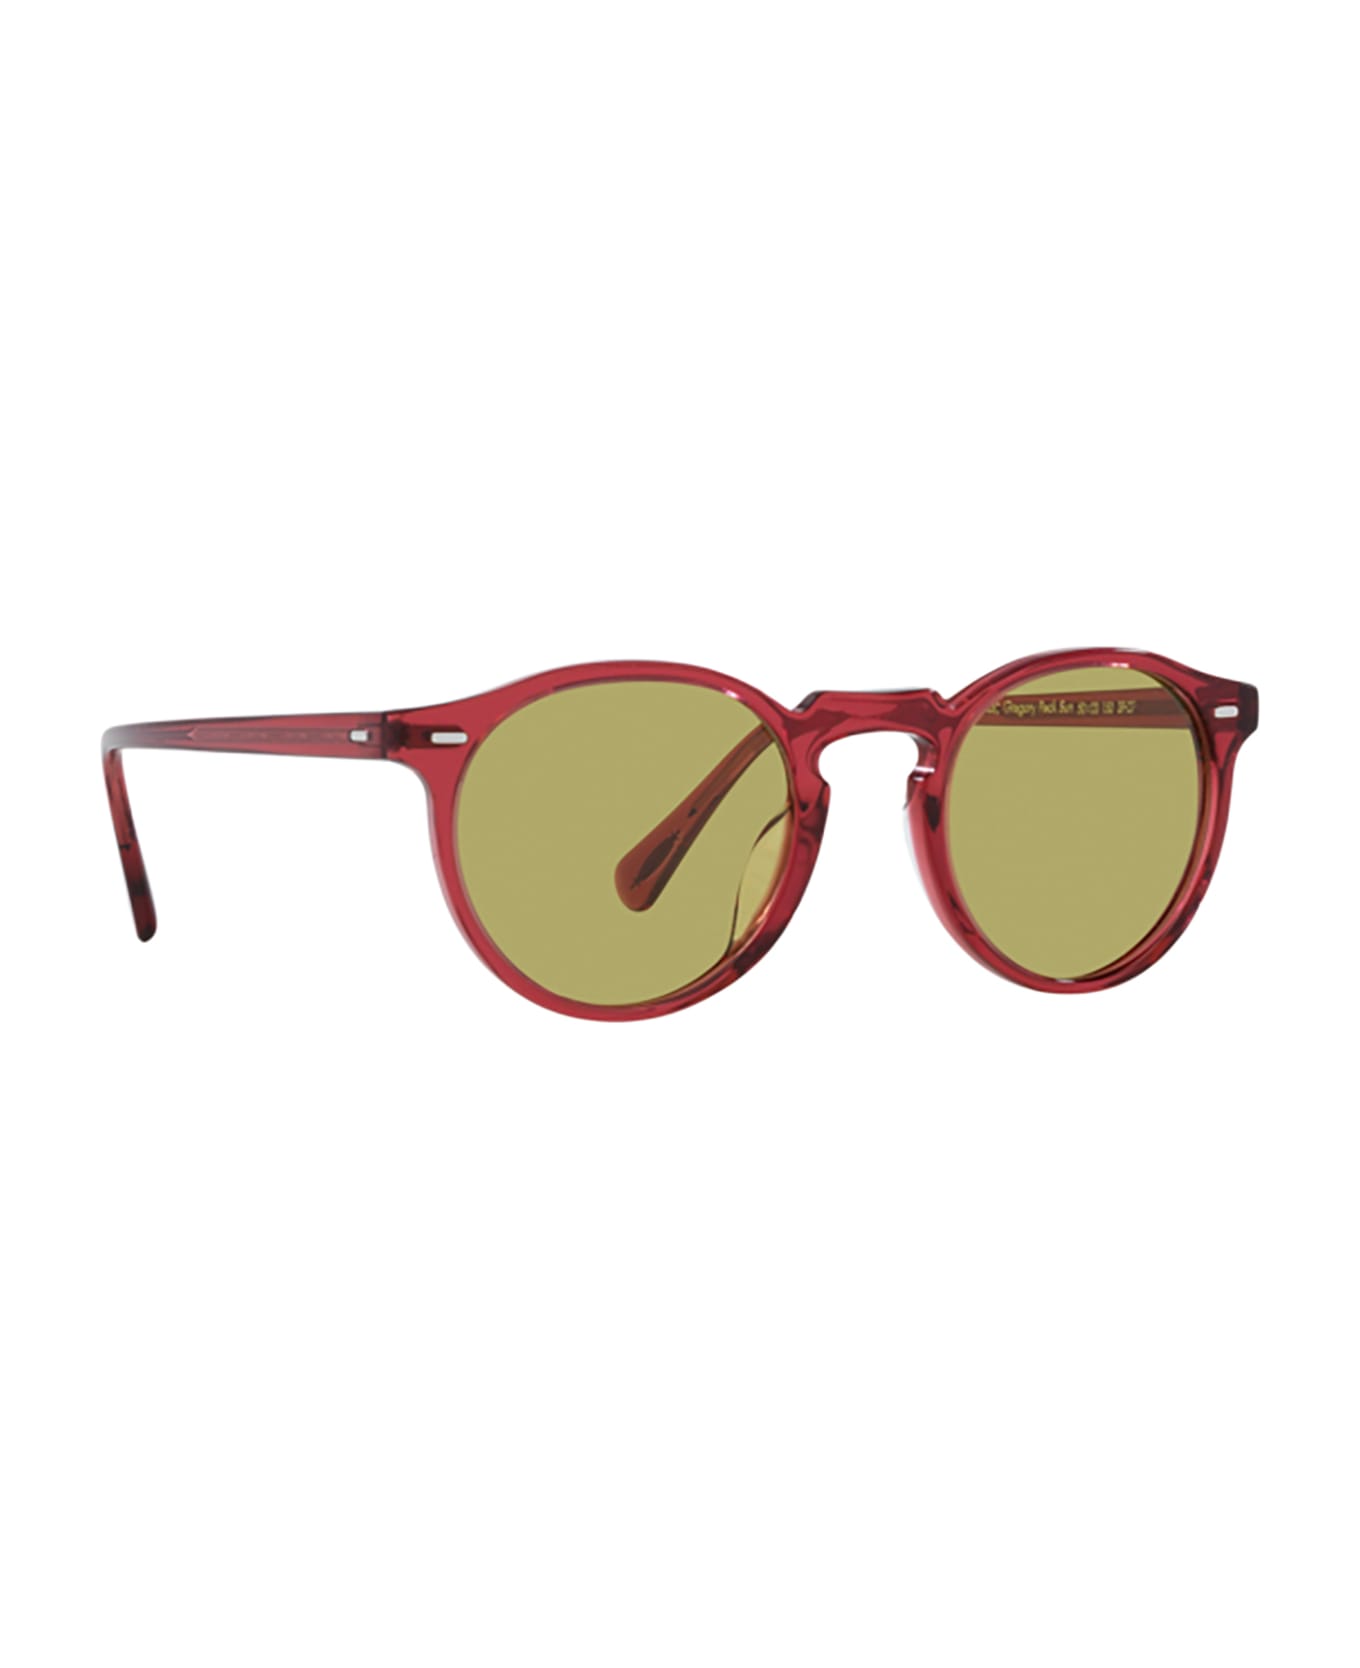 Oliver Peoples Ov5217s Translucent Rust Sunglasses - Translucent Rust